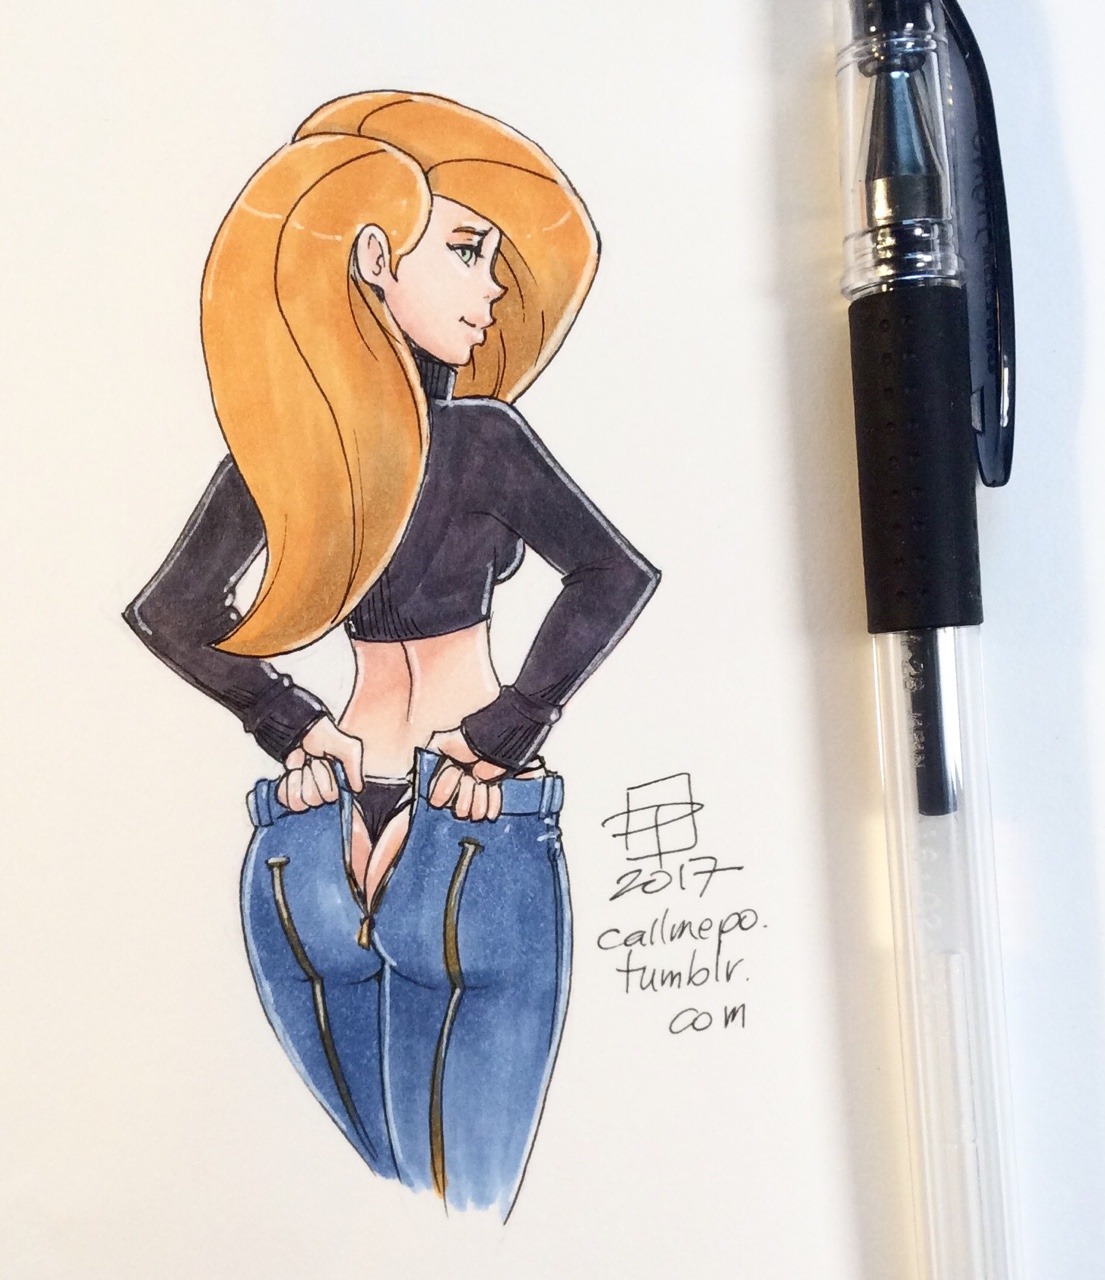 callmepo:More zipper ass jeans tiny doodles. ;9